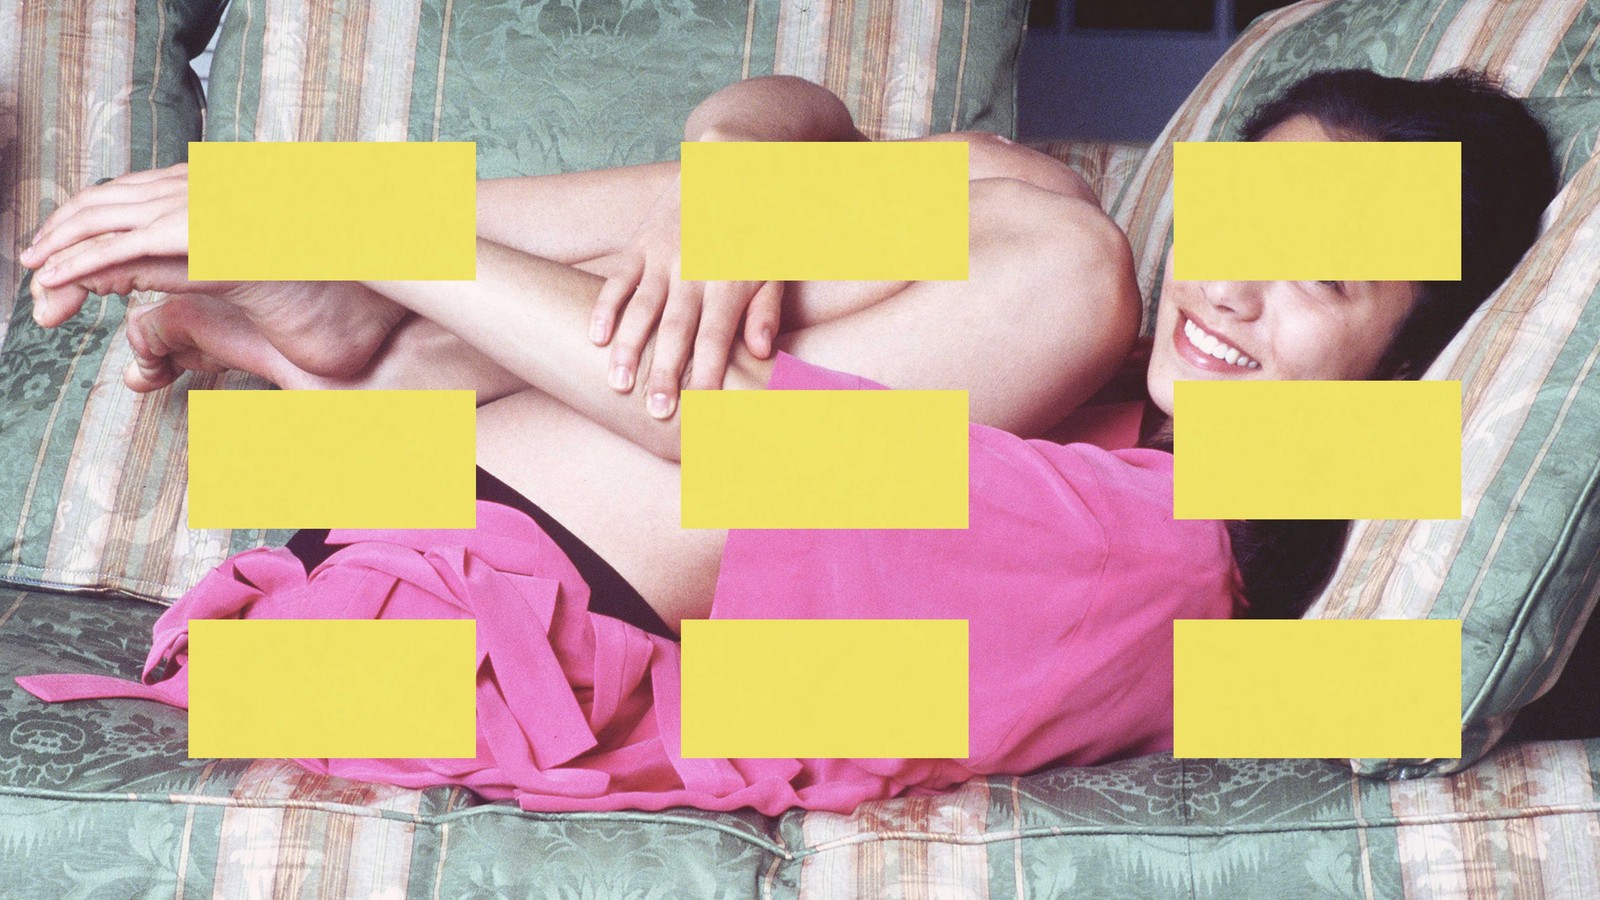 Brother Rape Sleep Sister Video Hd Com - Melissa Febos's 'Girlhood' Is a Lucid ExposÃ© on Rape Culture - The Atlantic